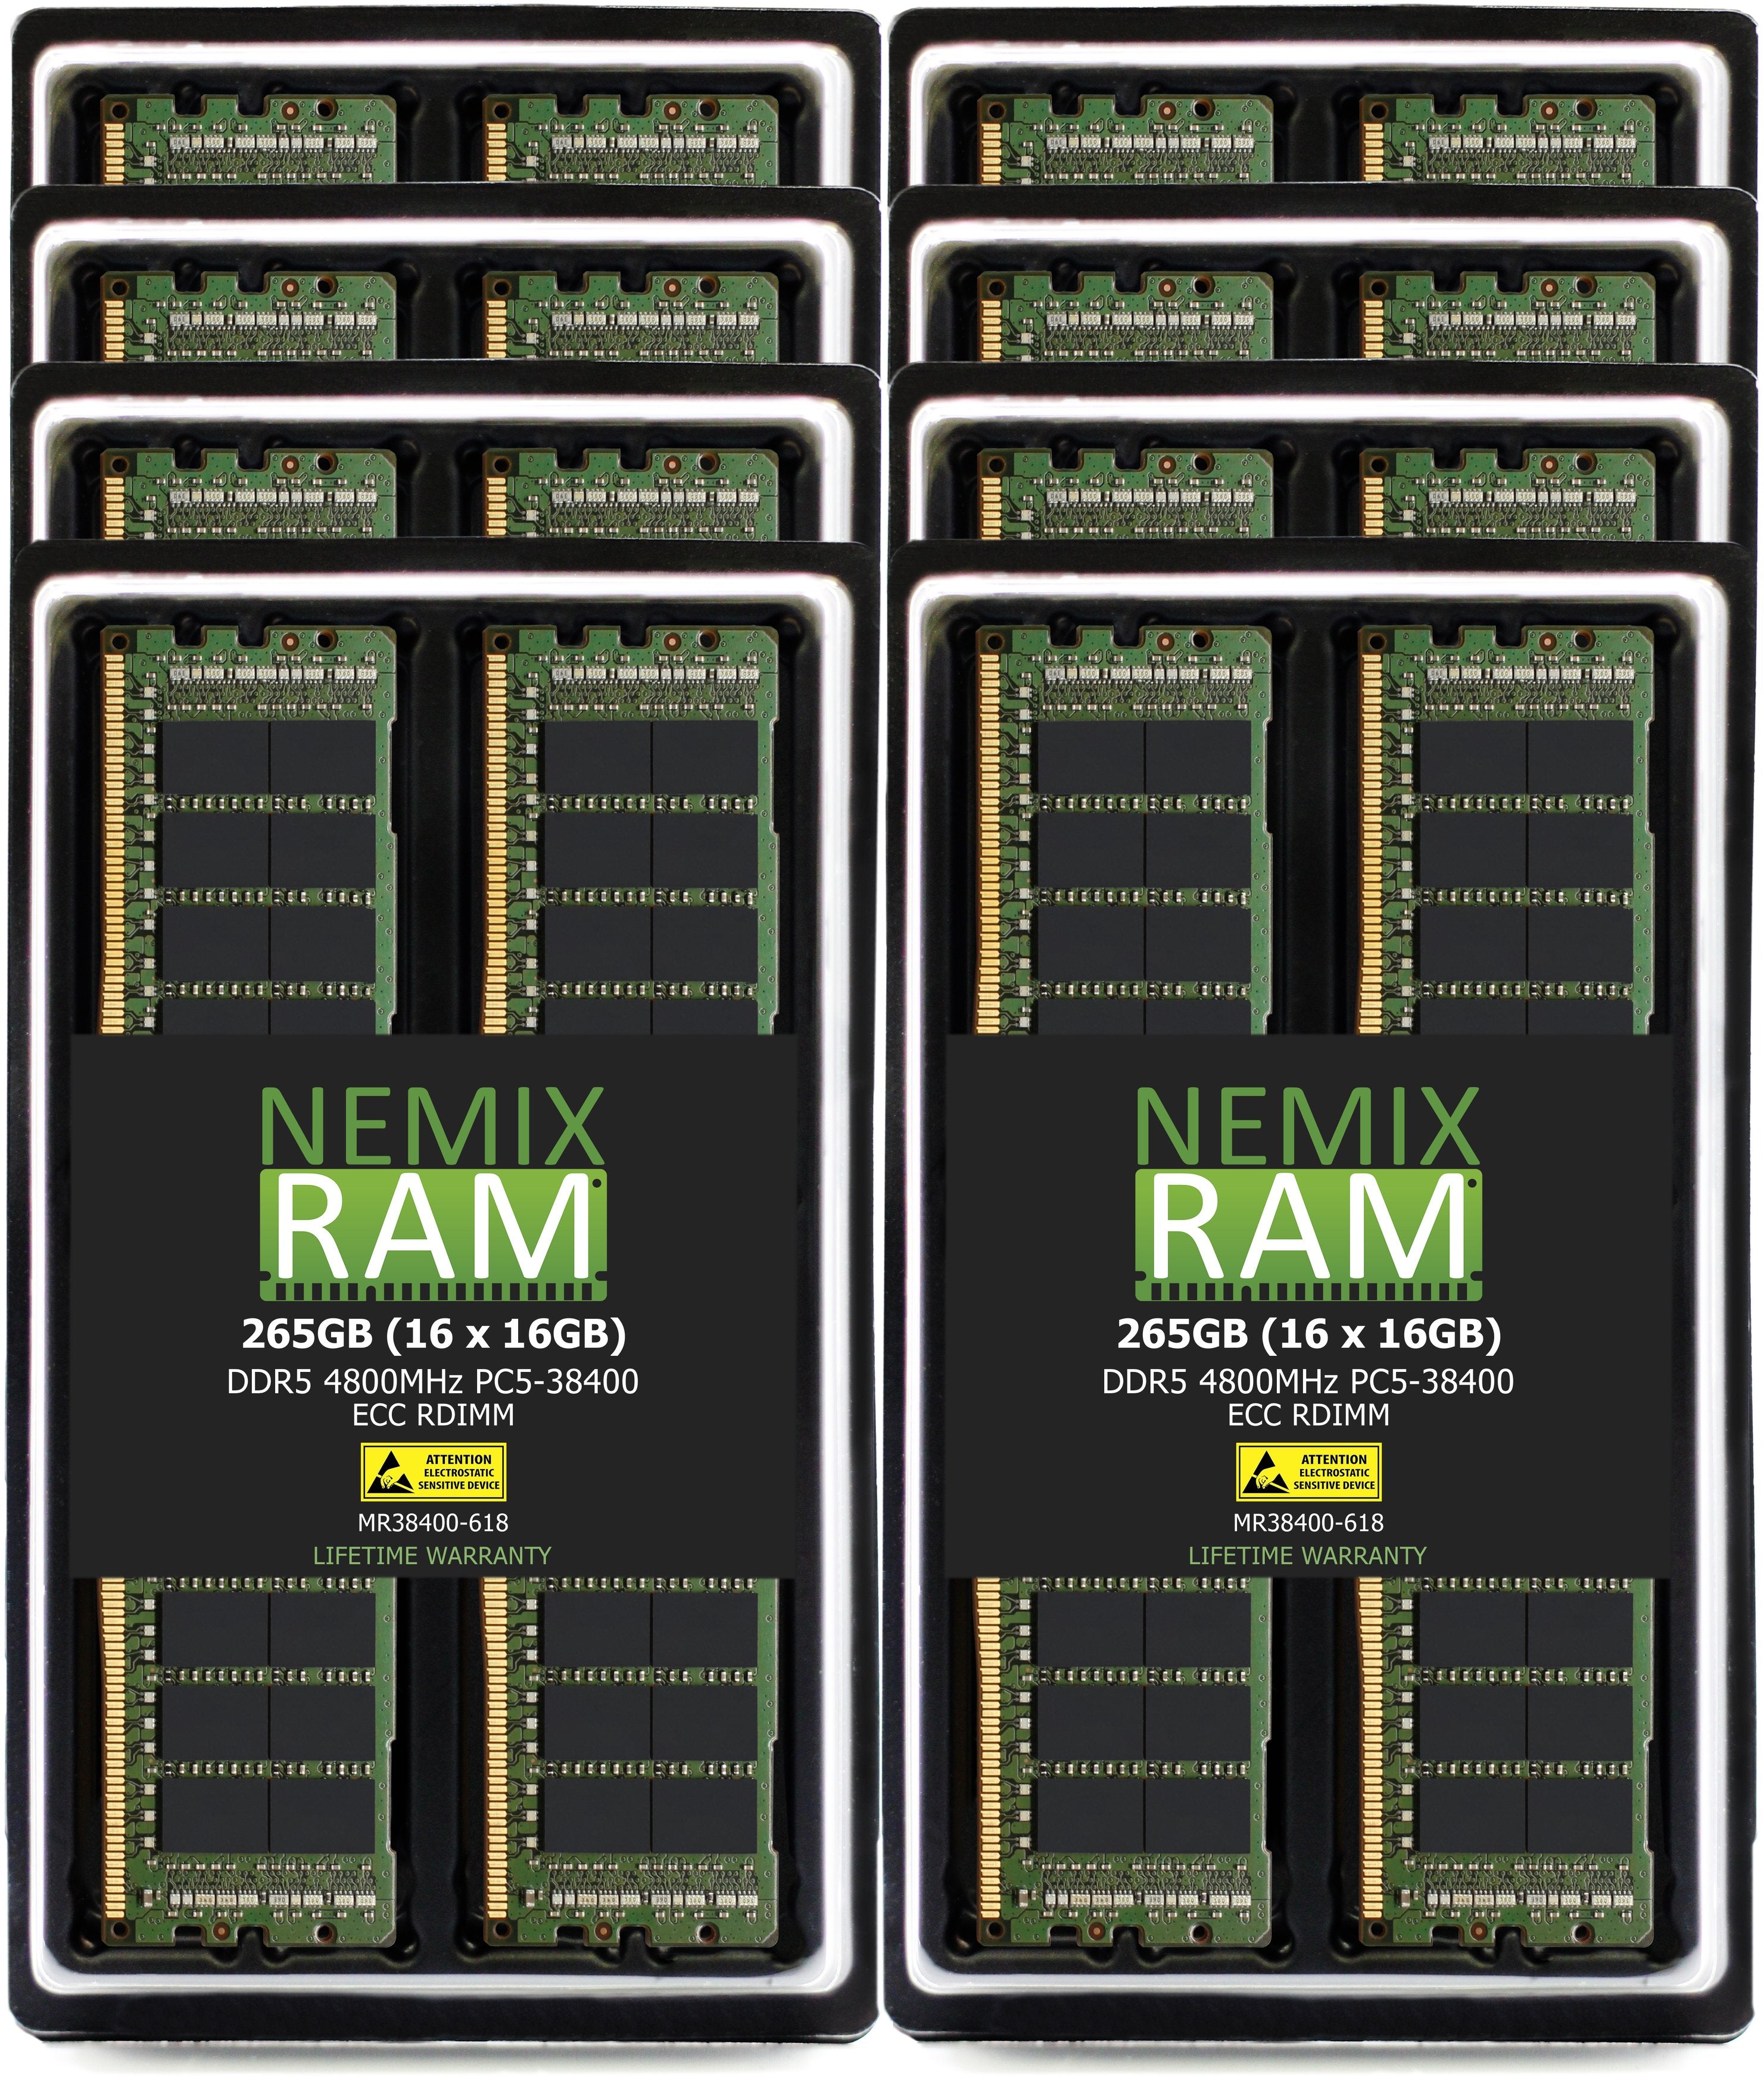 DDR5 4800MHz PC5-38400 RDIMM 1Rx8